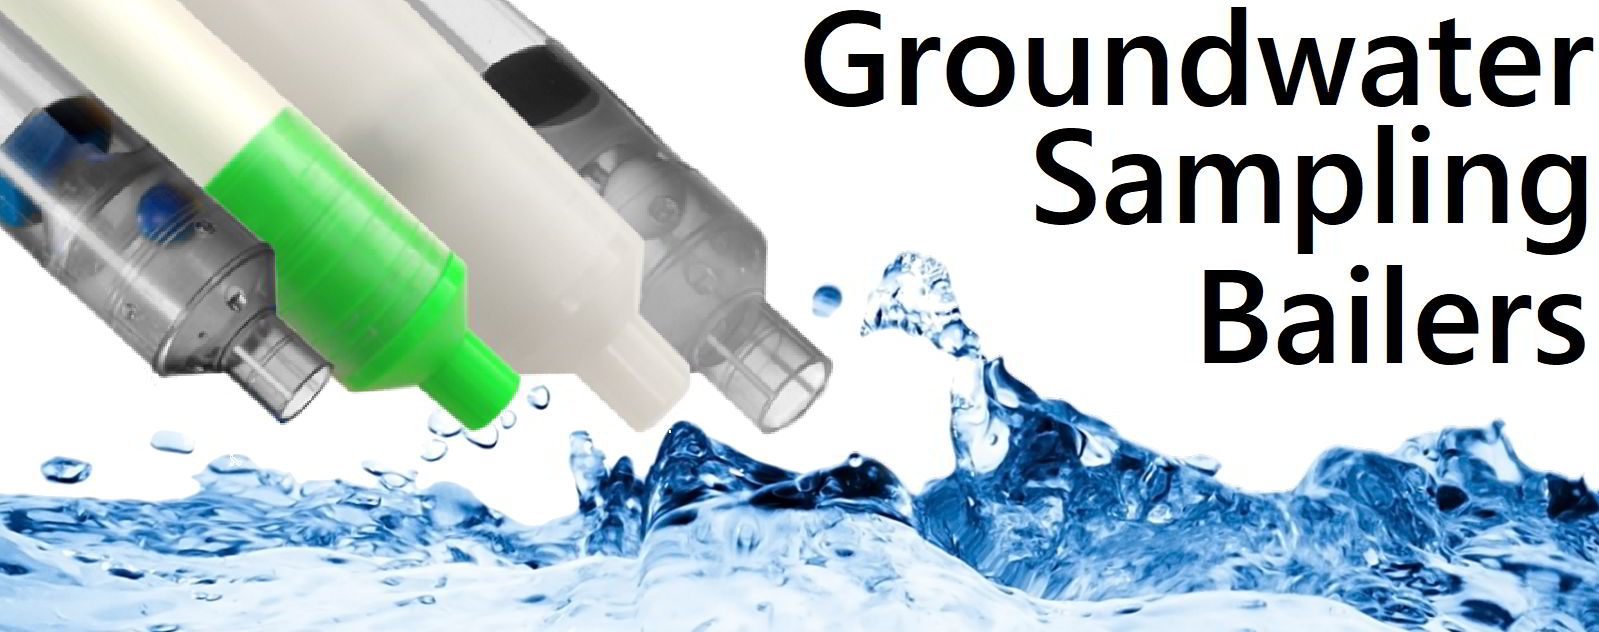 Groundwater Sampling Bailers